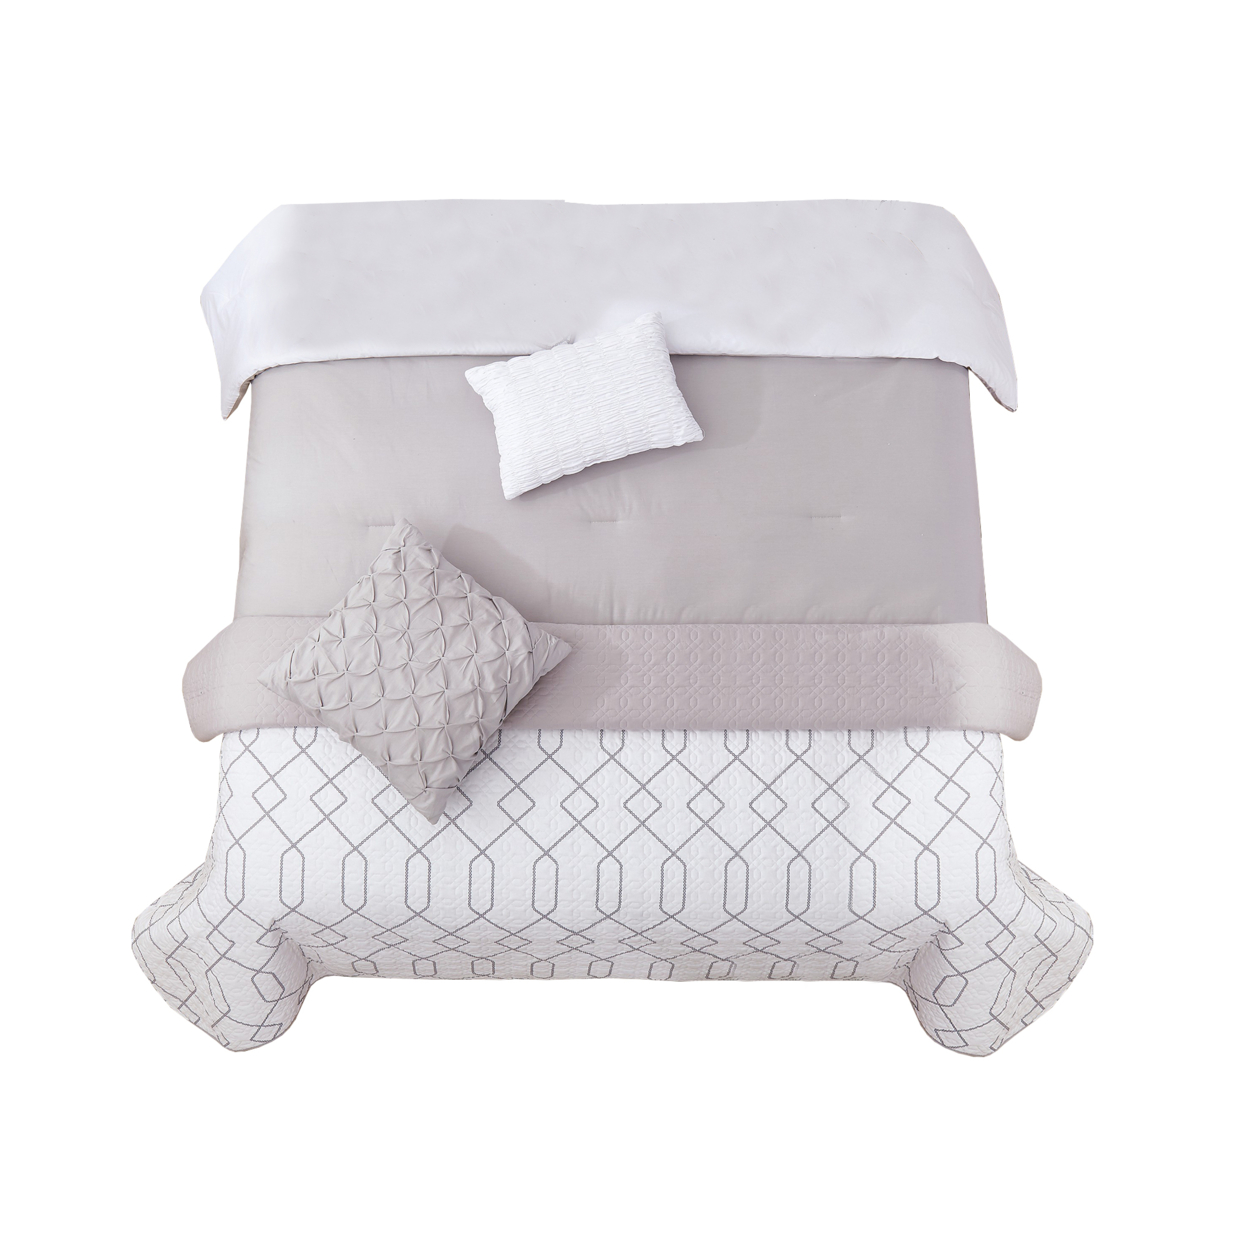 8 Piece King Size Fabric Comforter Set With Geometric Prints,White And Gray- Saltoro Sherpi